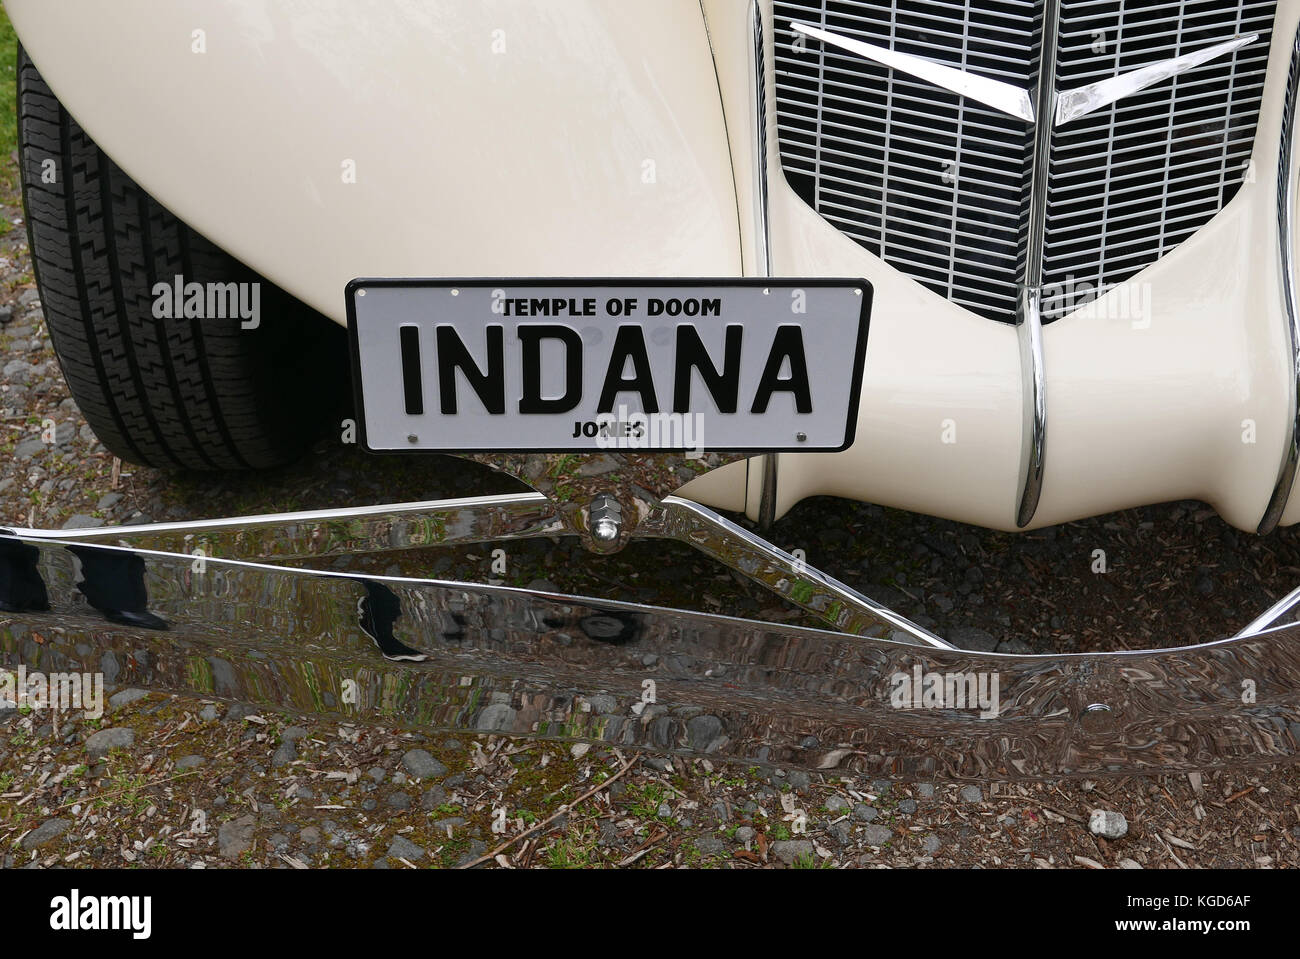 Indiana Jones Temple of doom car Stock Photo